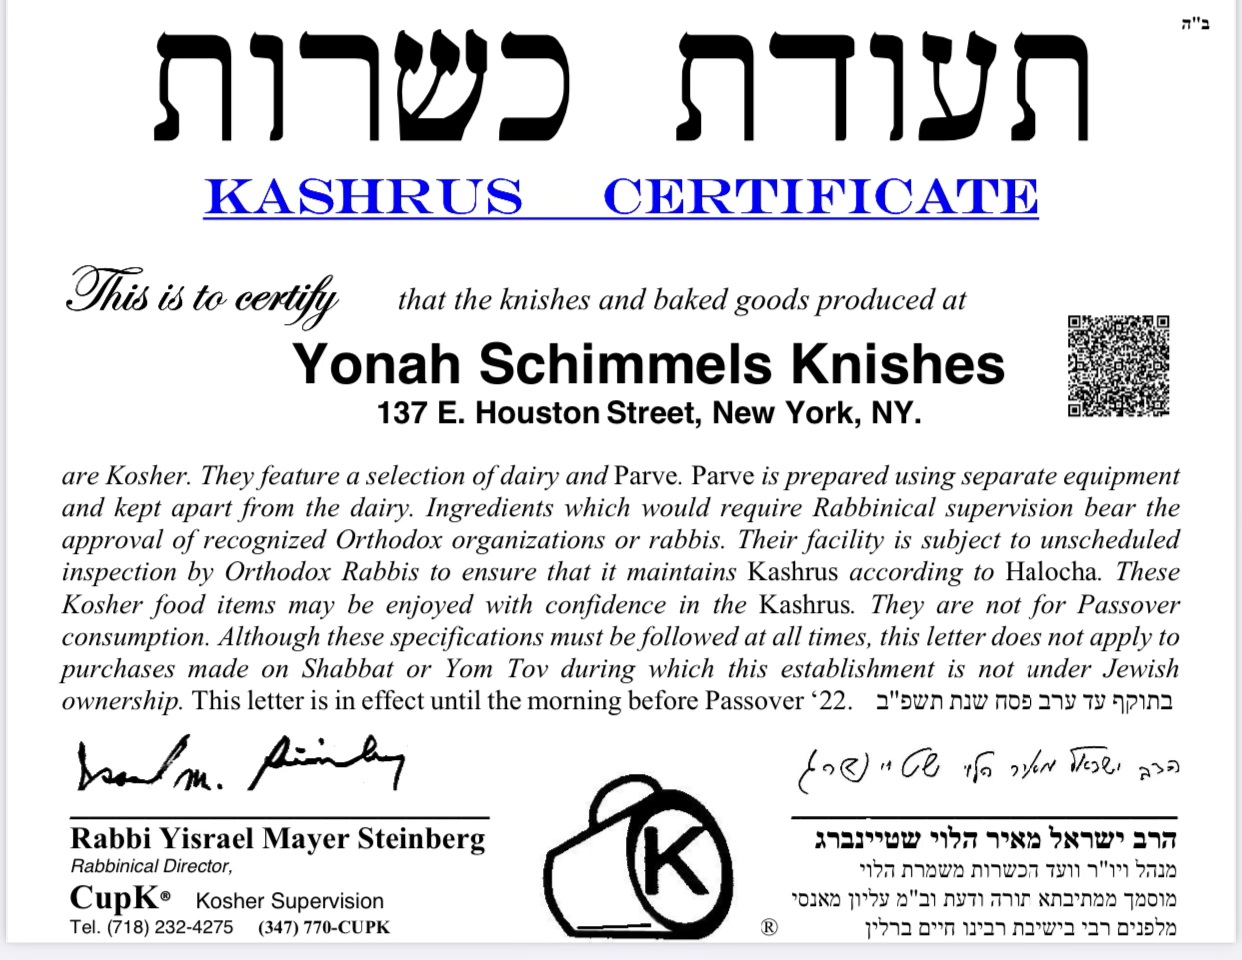 kosher certification